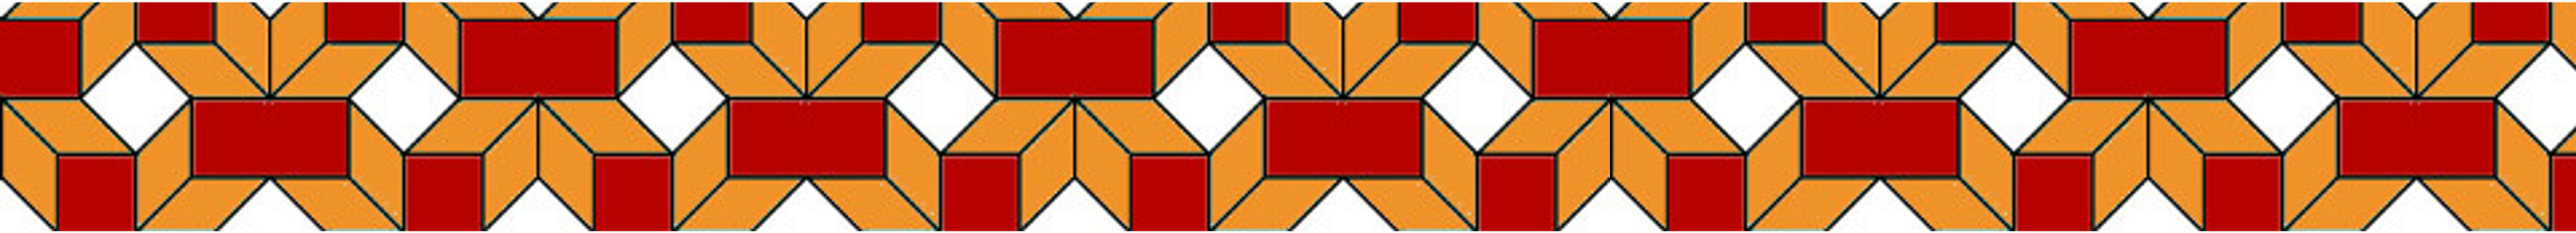 Roman tile border